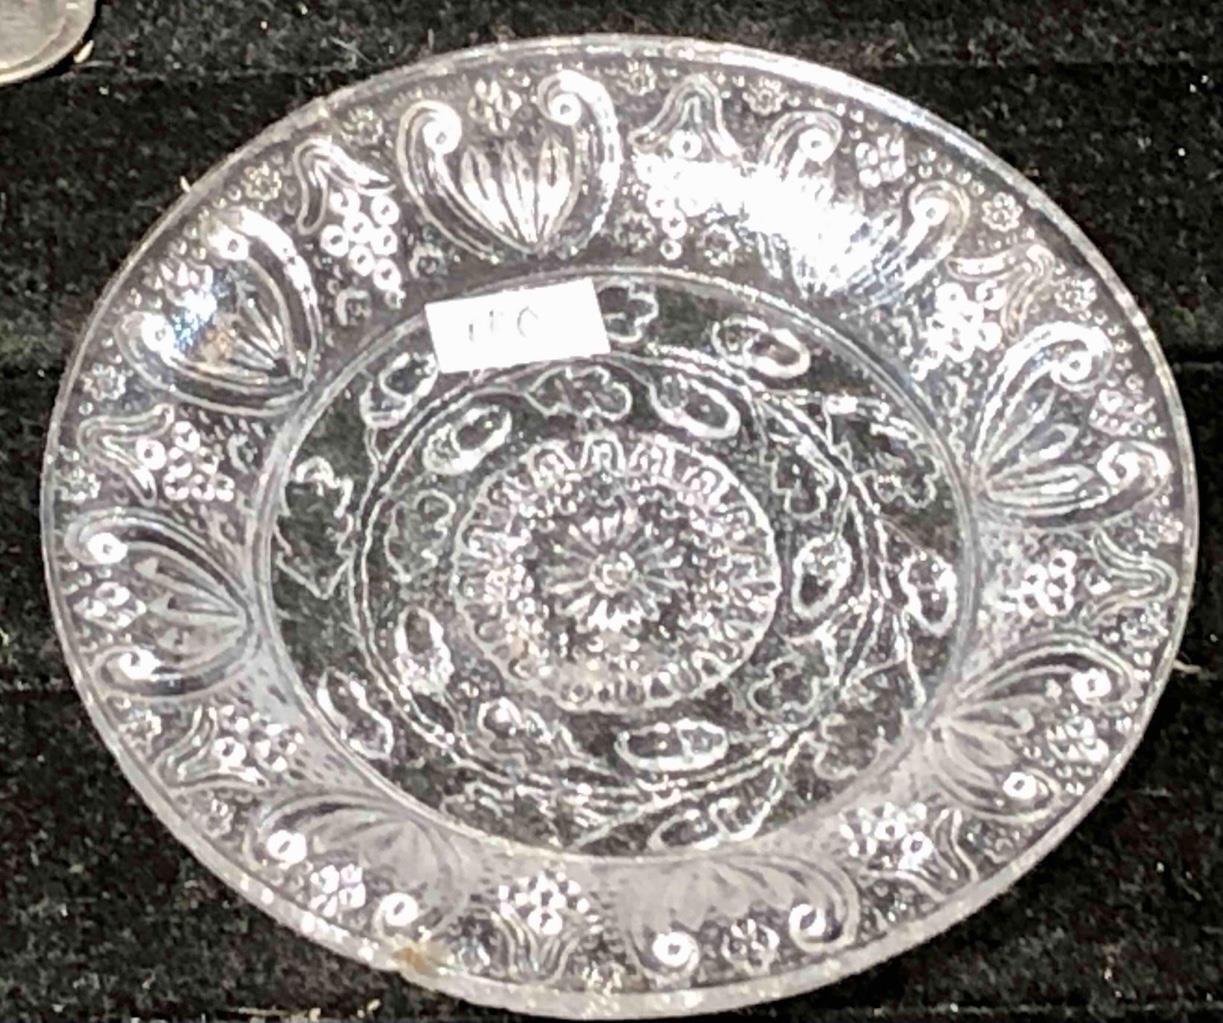 Rare Antique Pressed Flint Glass Cup Plate, LR 100, Union Glass Philadelphia